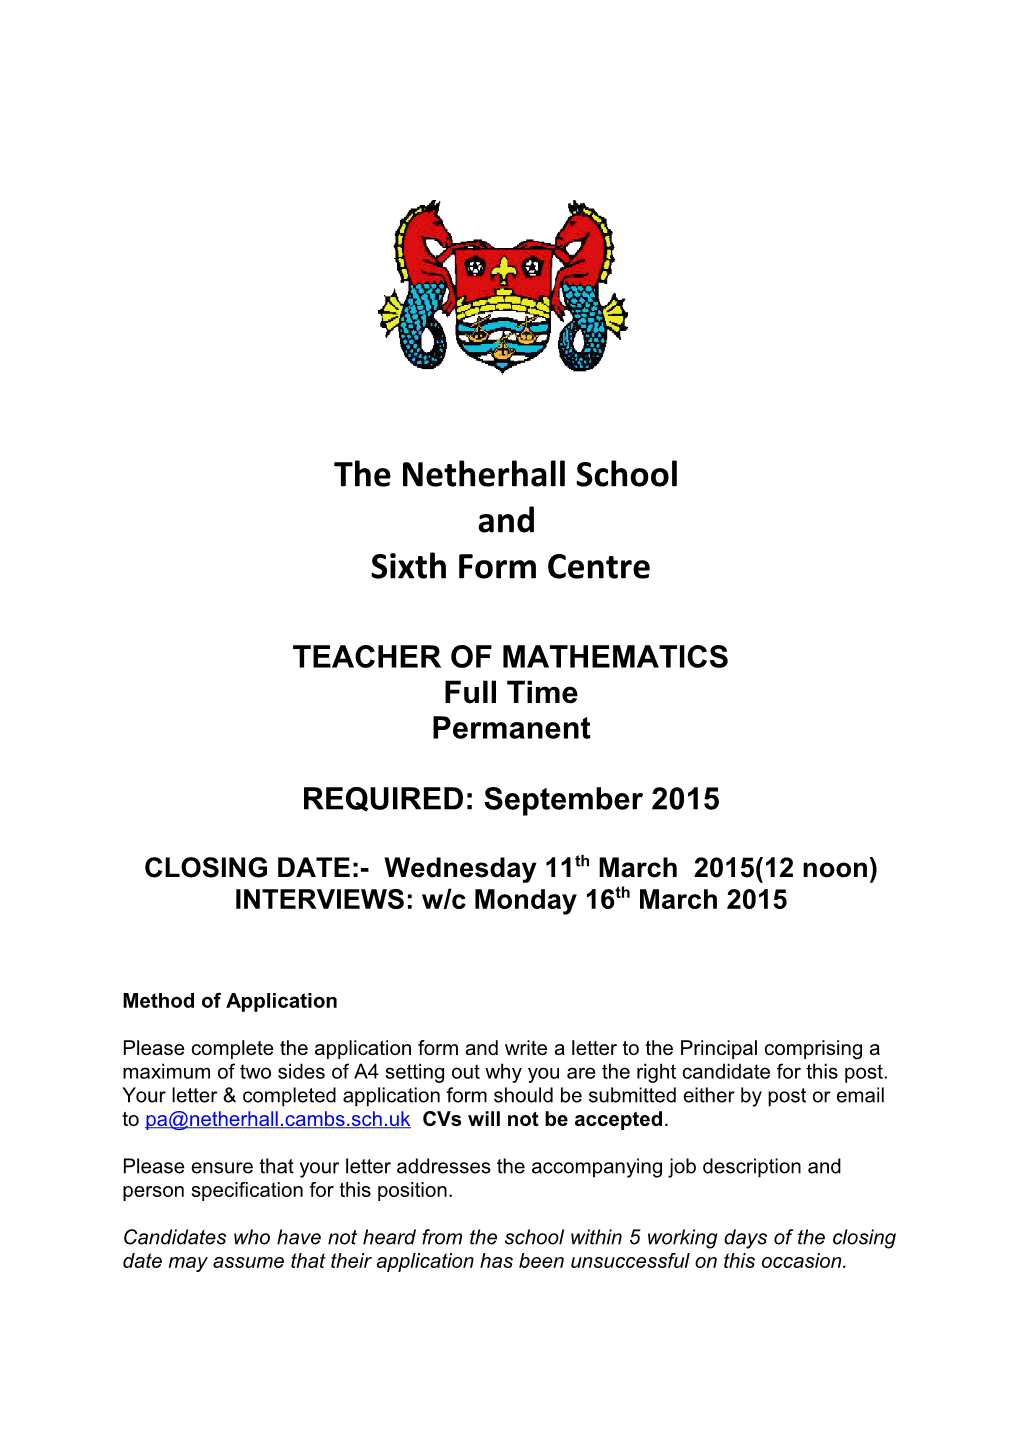 The Netherhall School, Cambridge